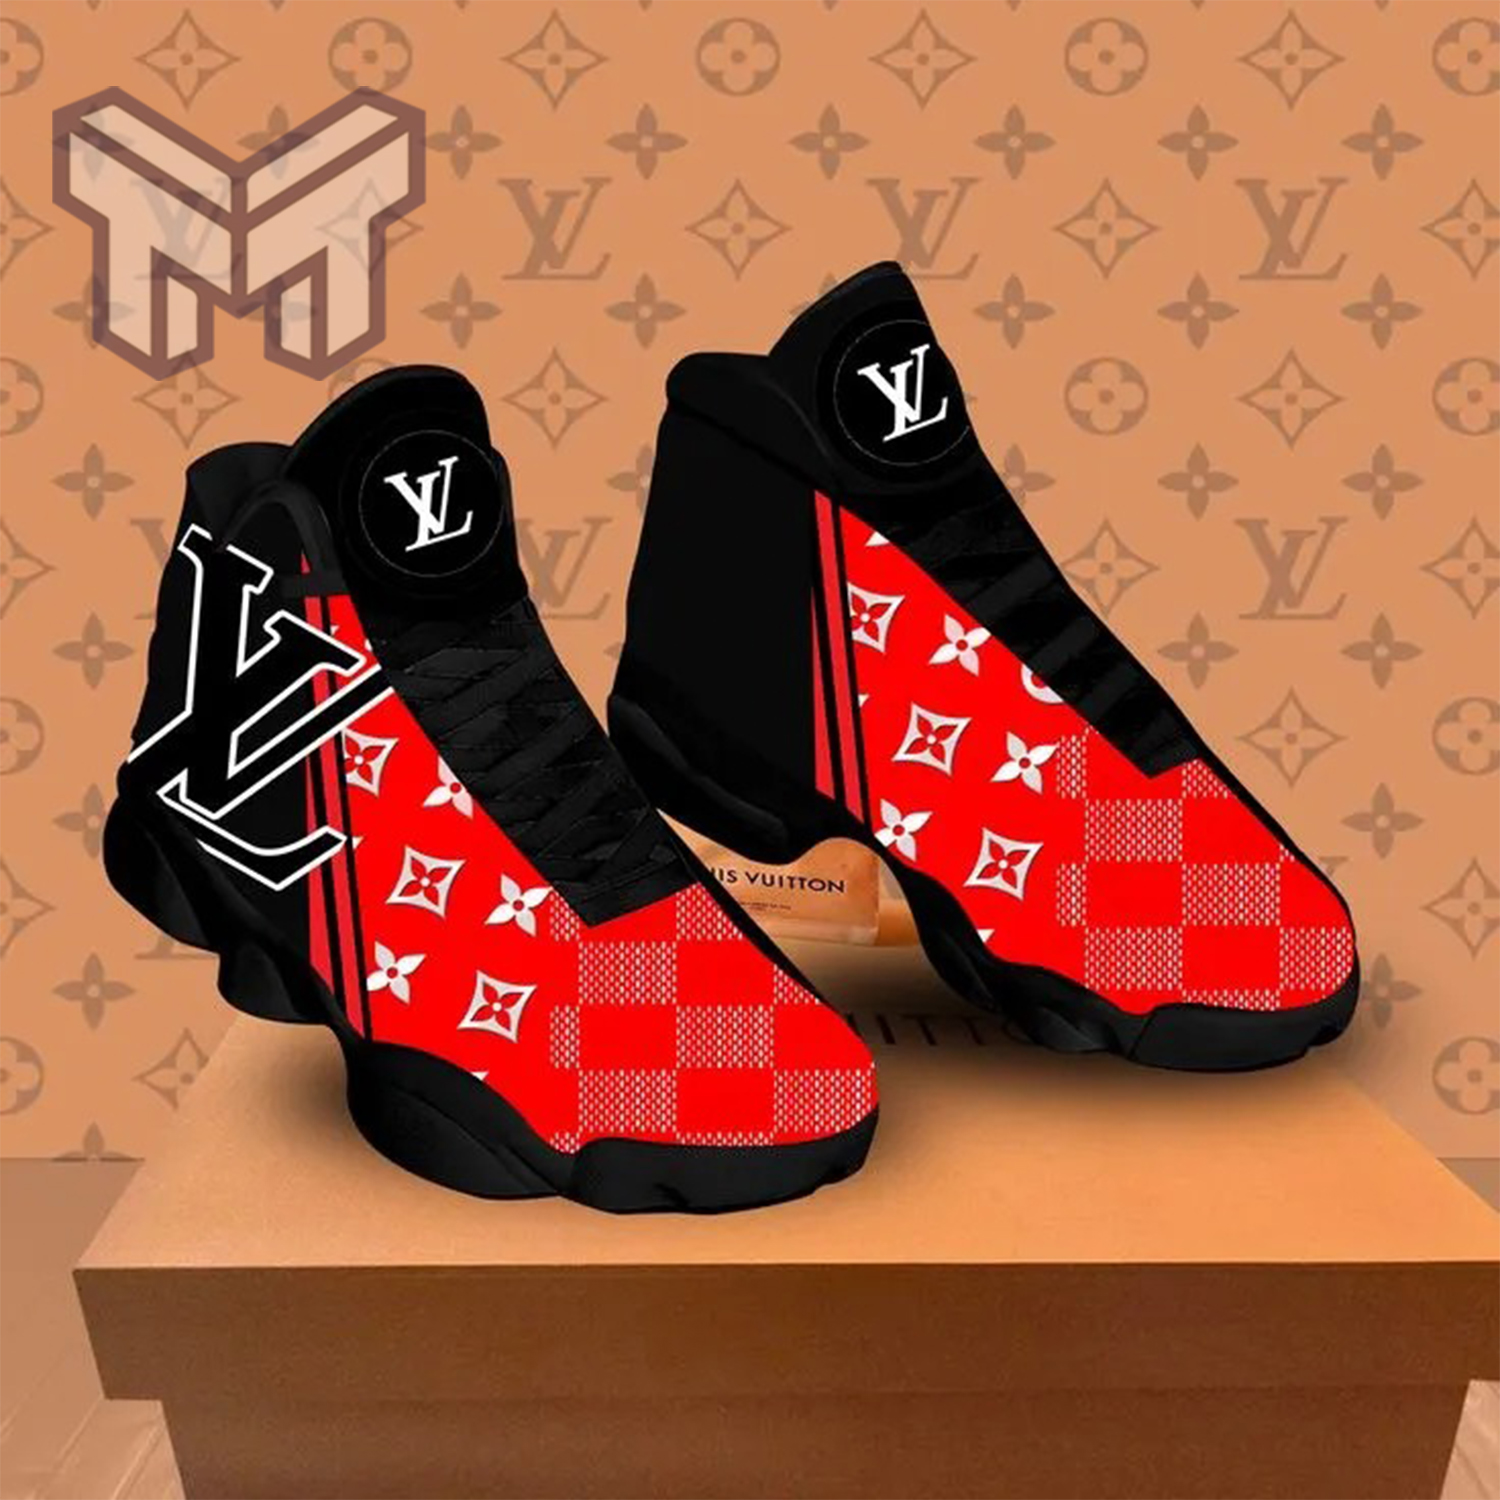 Louis Vuitton Supreme Black Red Air Jordan 13 Sneakers Shoes Hot